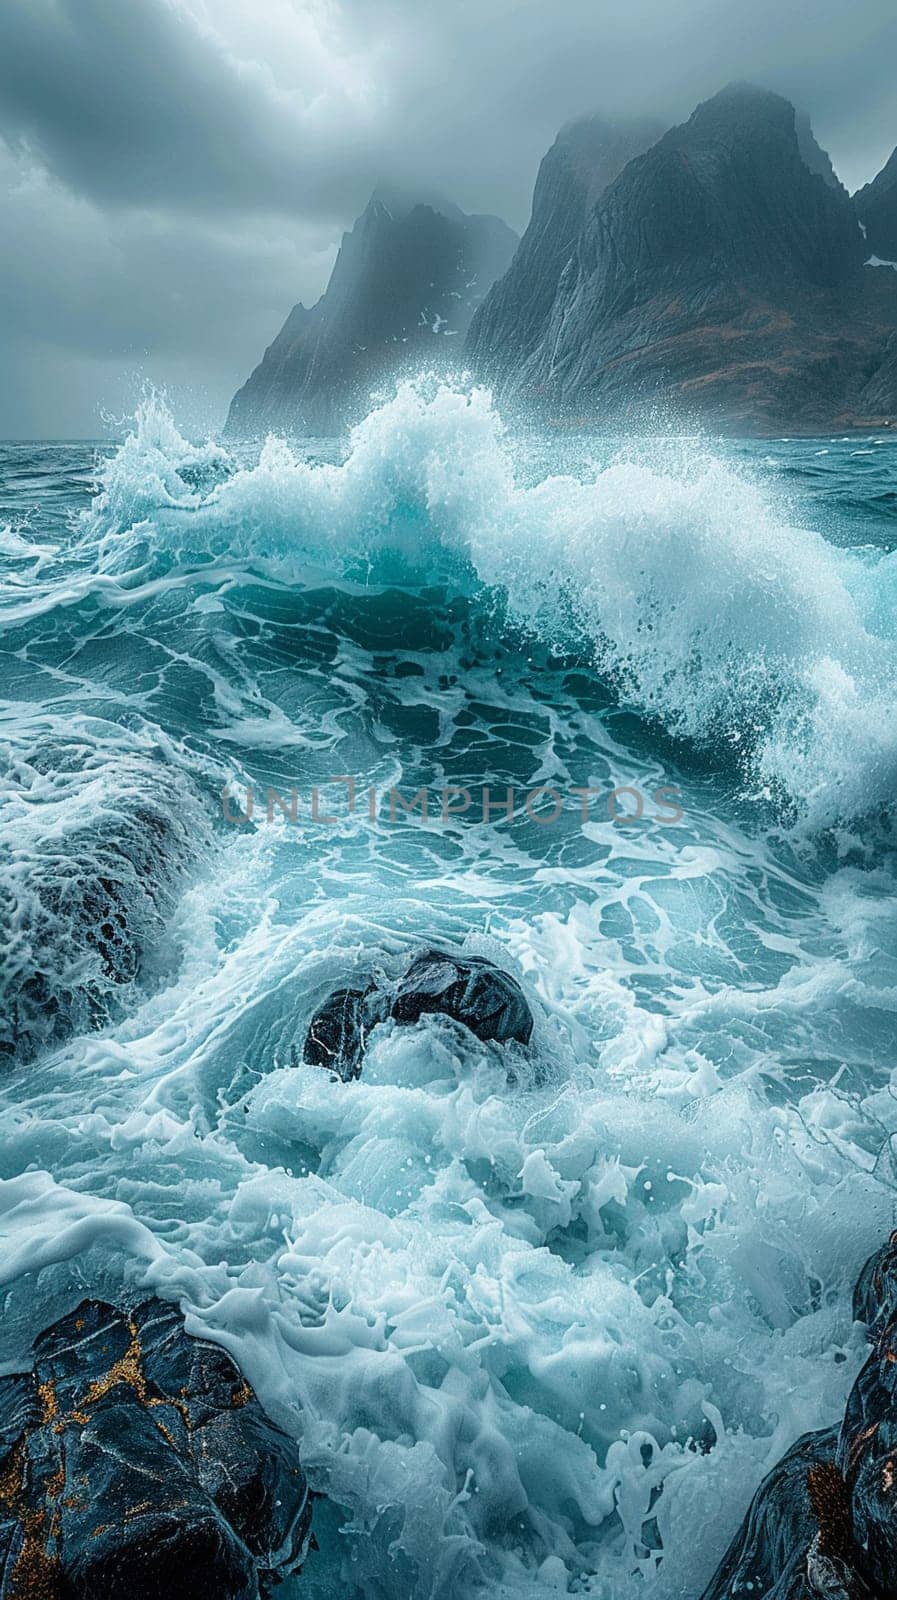 Crashing waves on a rocky coastline under a stormy sky by Benzoix